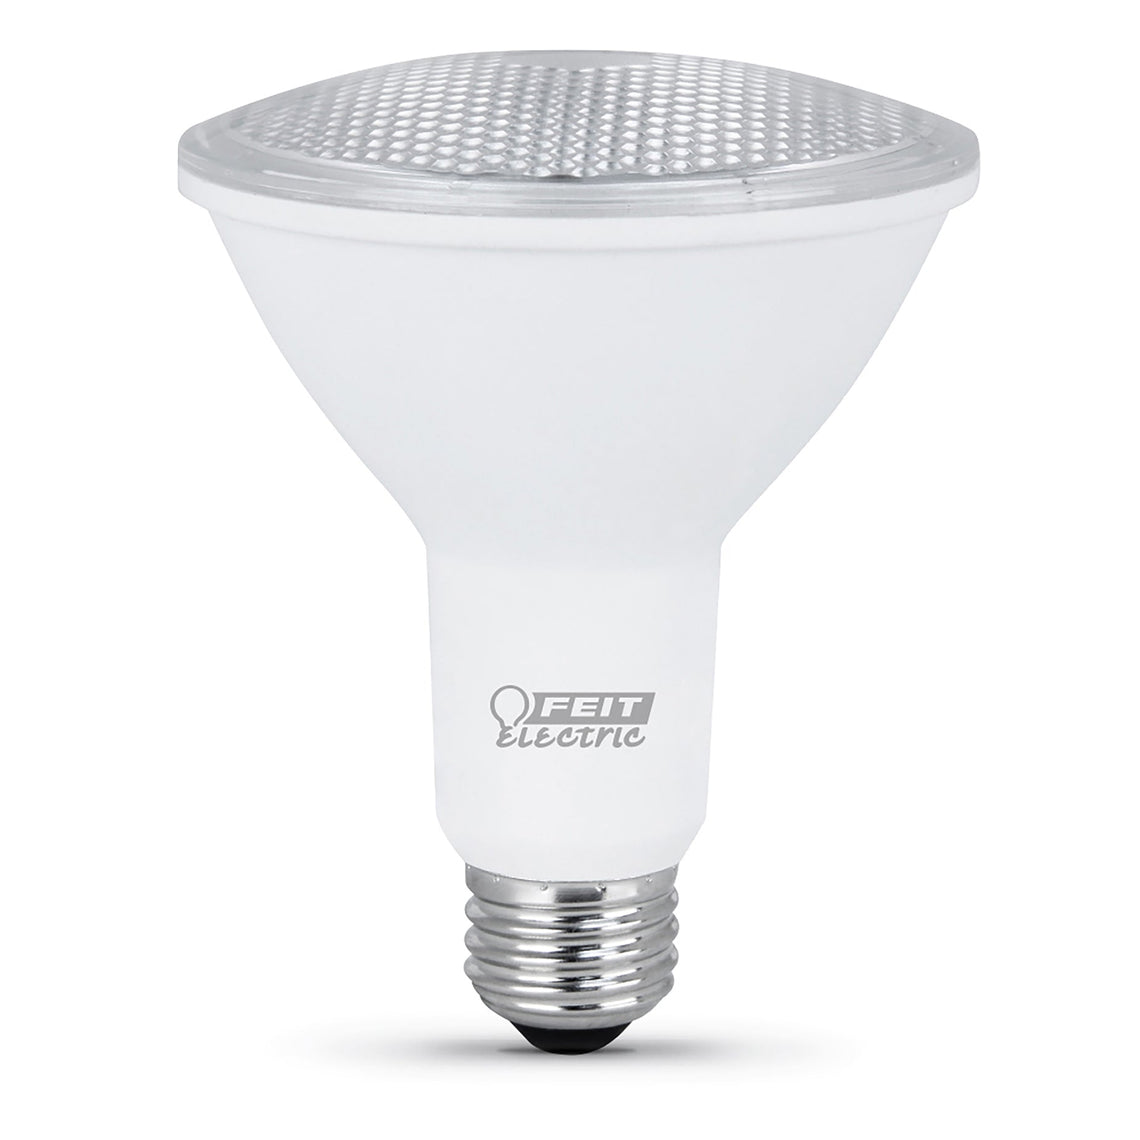 PAR30 LED Light Bulbs, 10.5 Watts, E26, Non-Dimmable, 750 Lumens, 3000K